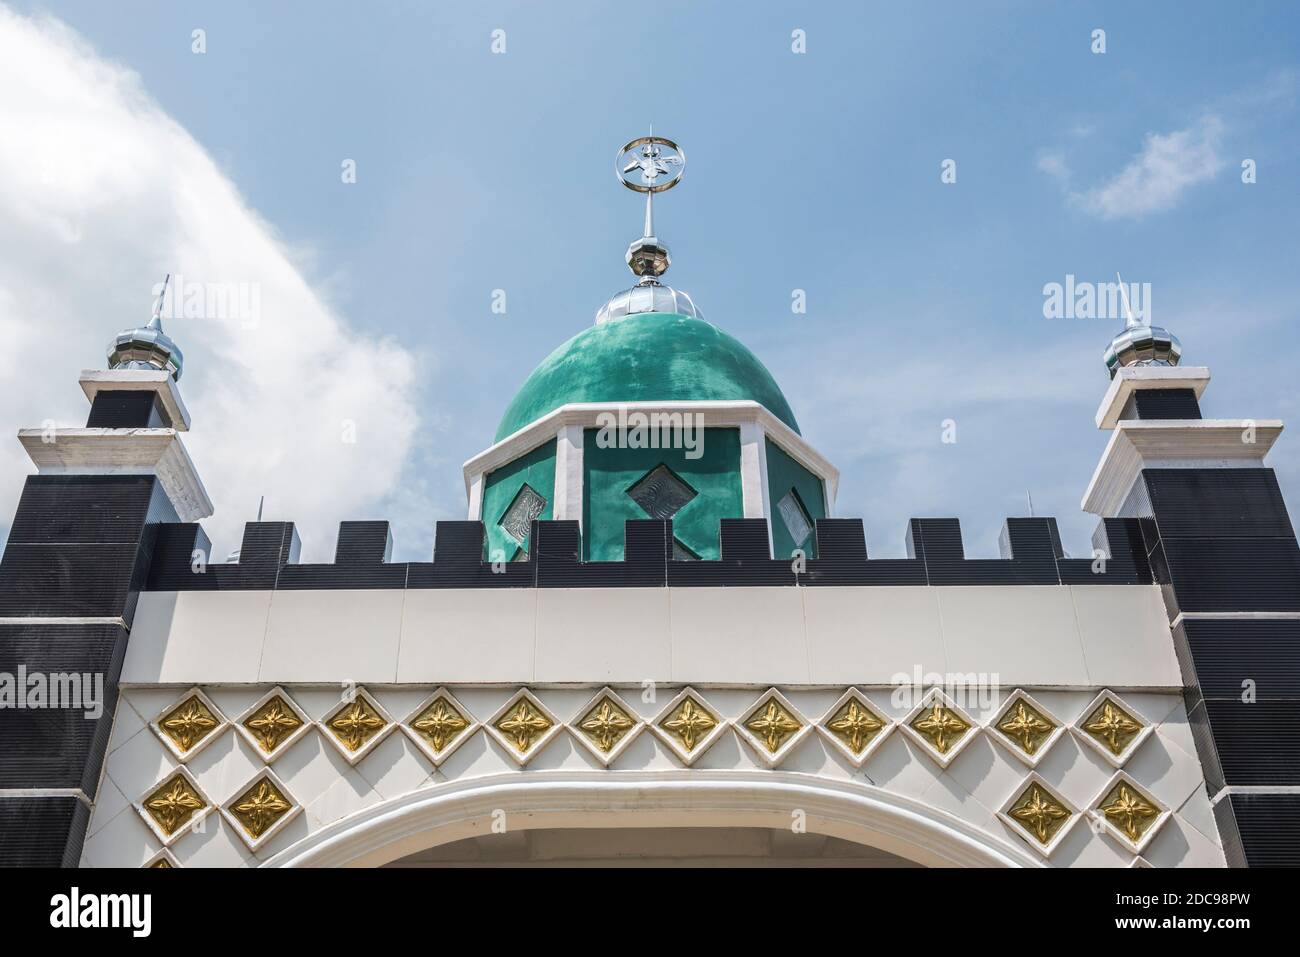 Baburrahman Mosque, Pulau Weh Island, Aceh Province, Sumatra, Indonesia, Asia Stock Photo